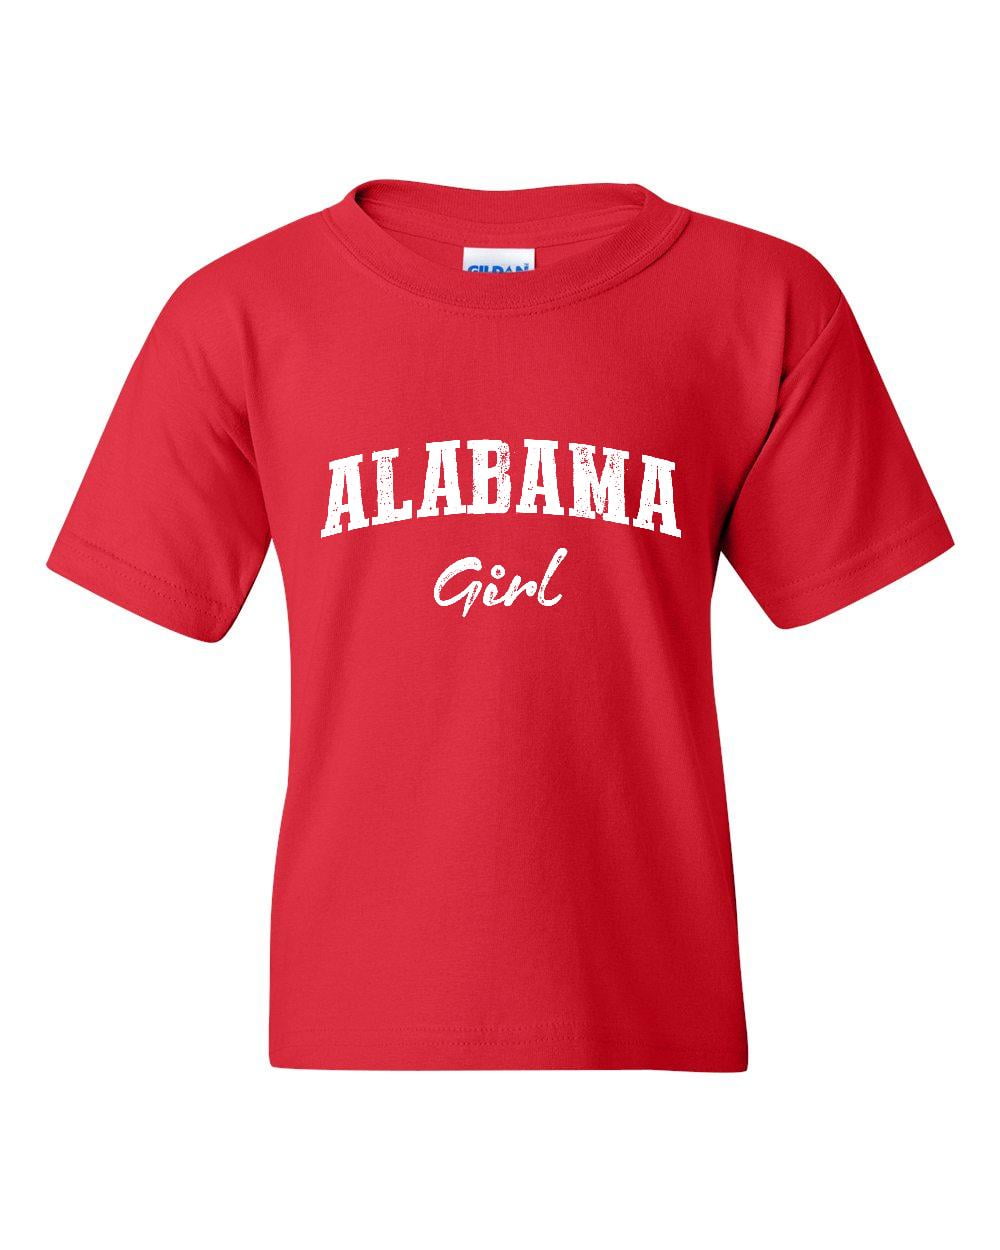 Kids Youth Medium 7/8 Crimson Tide Alabama collegiate short sleeve shirt 